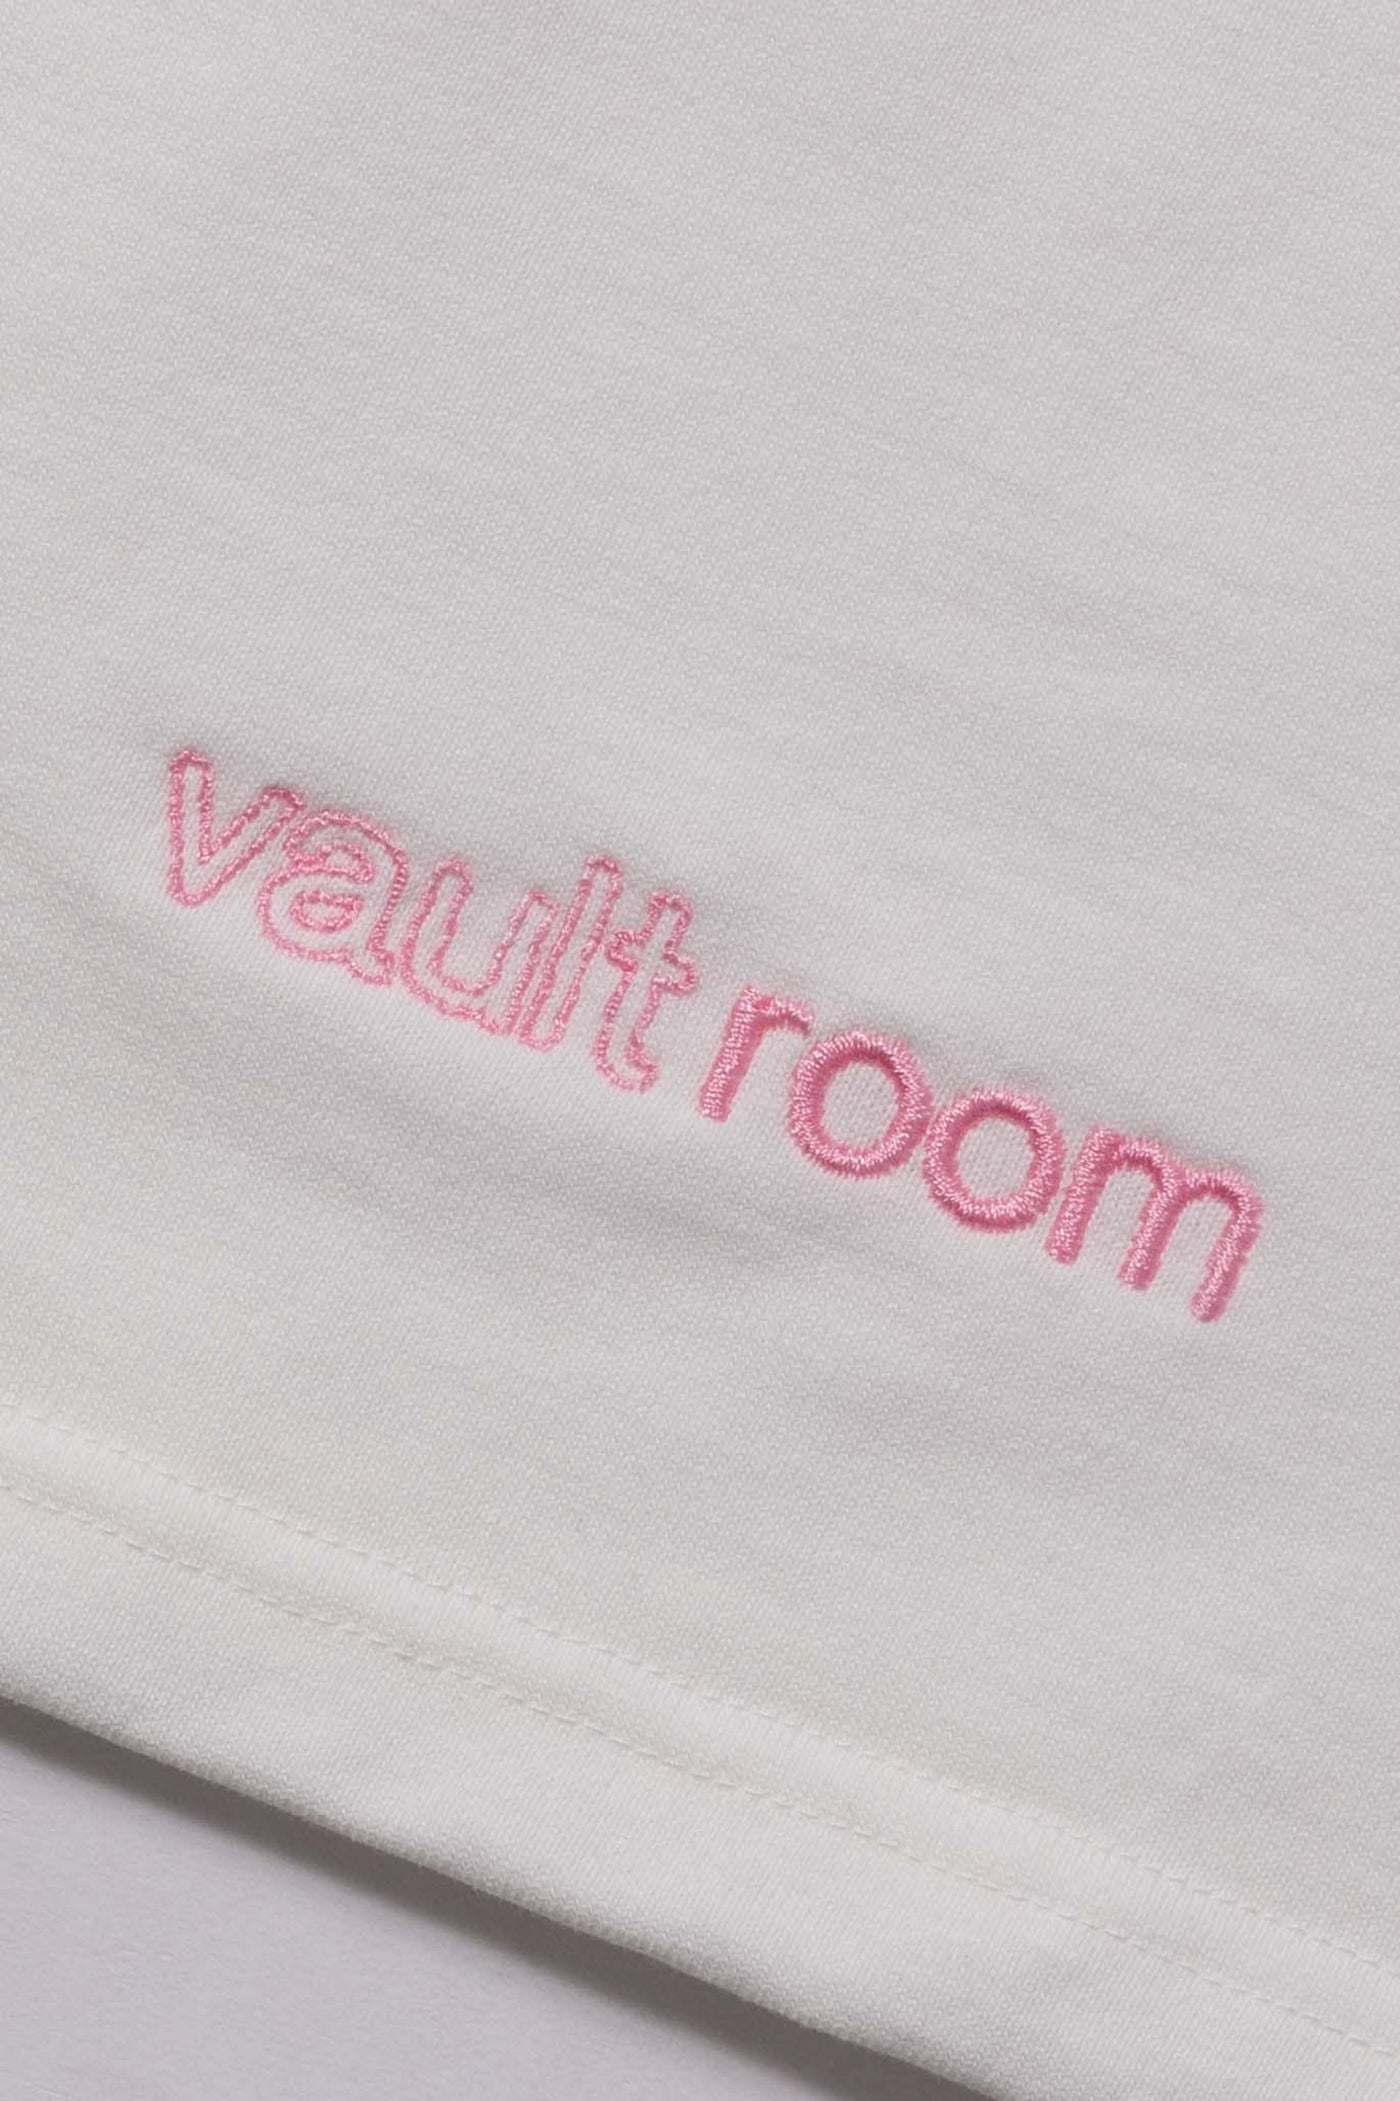 vaultroom あかりん ロンT Lサイズ